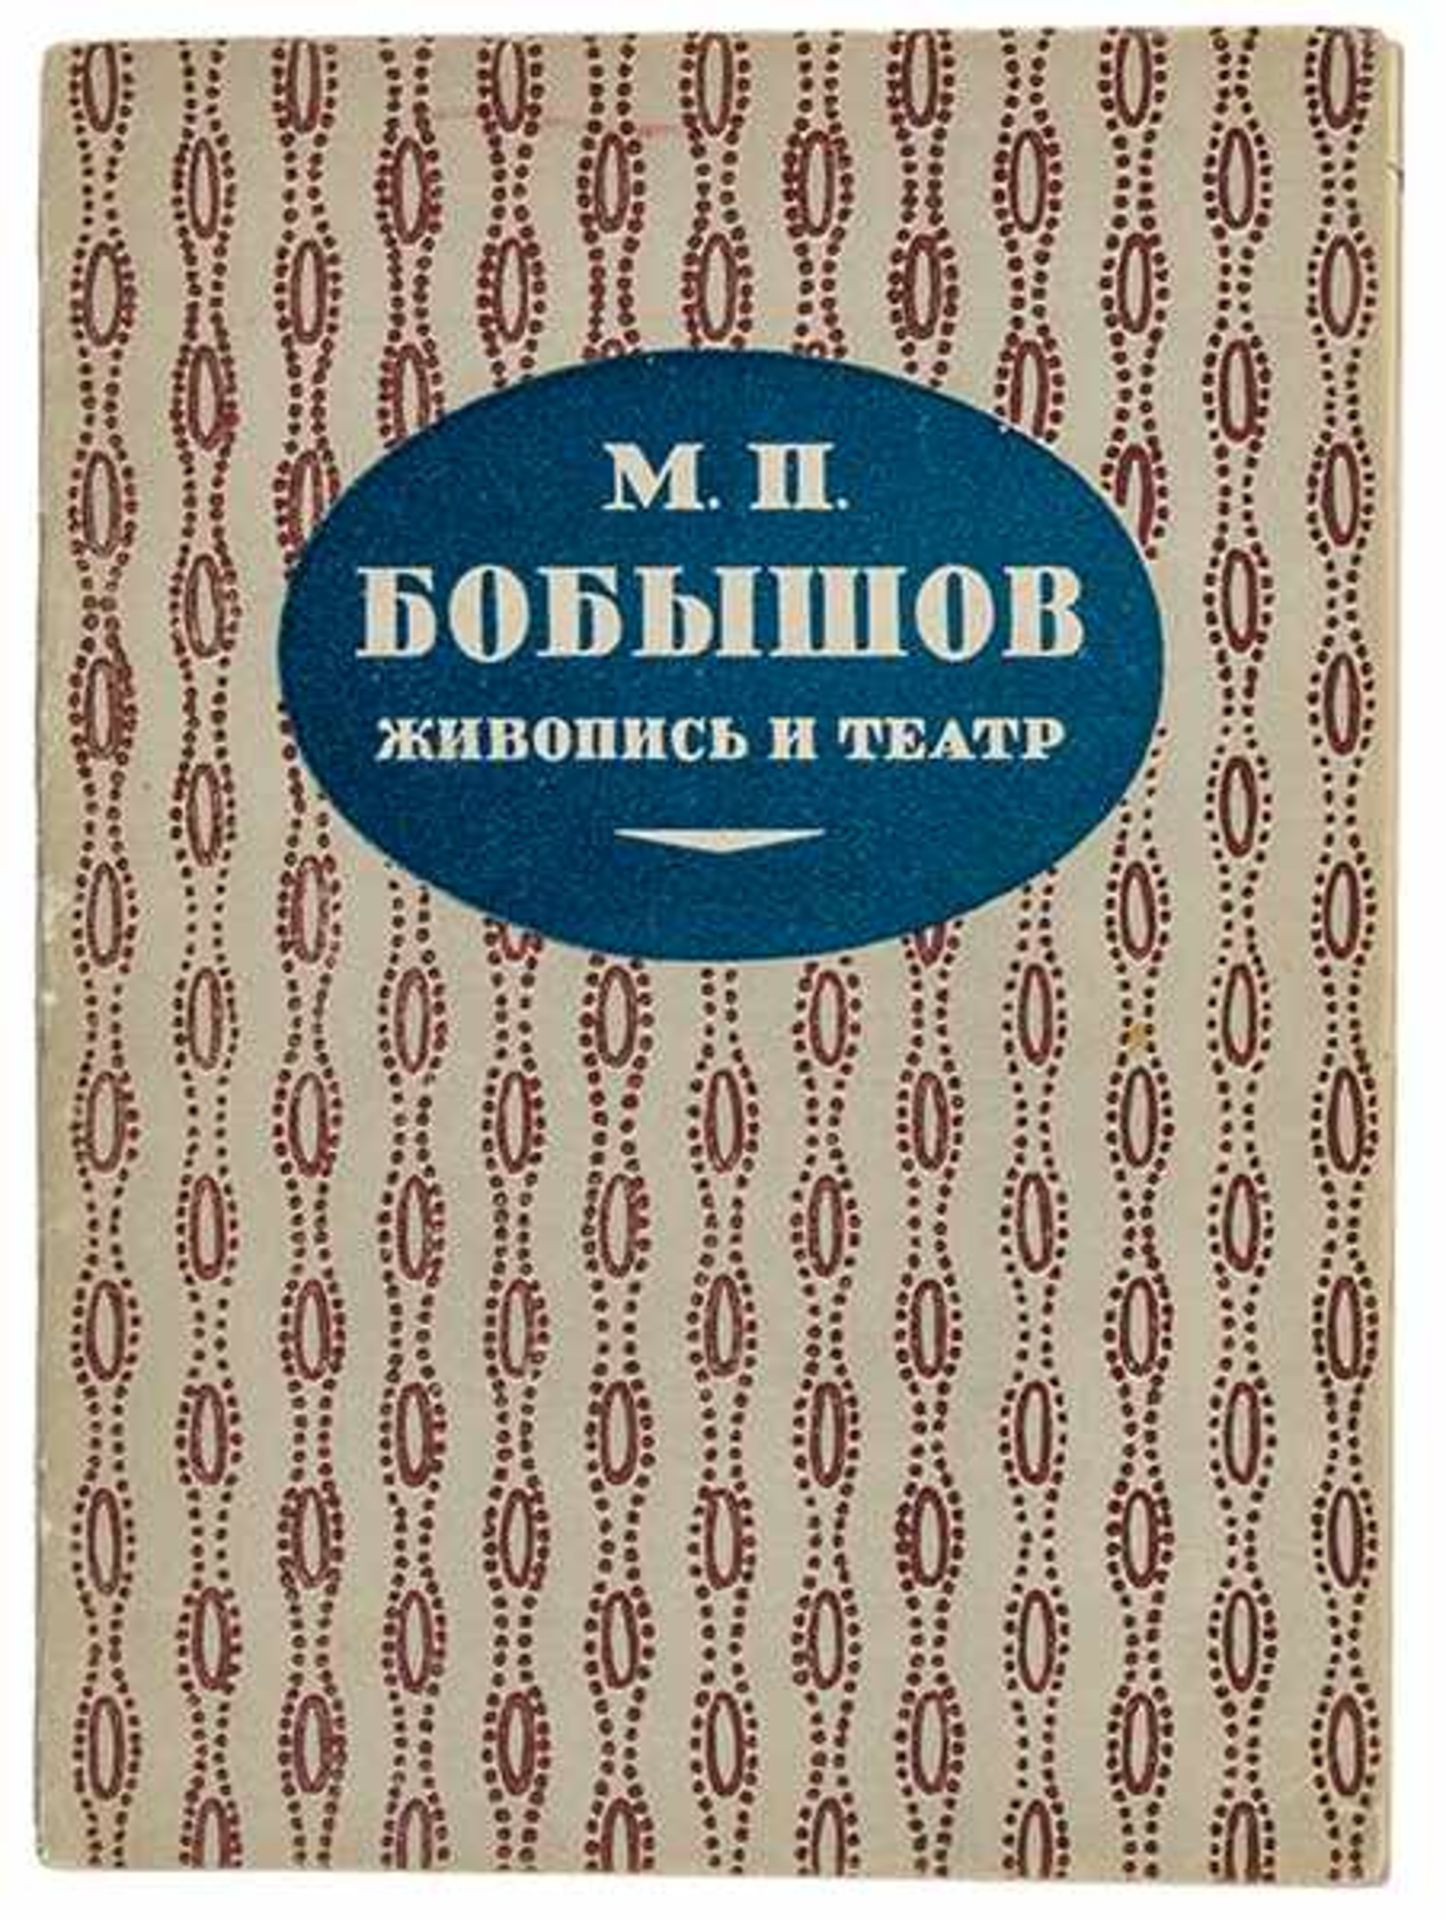 Russische Avantgarde - - Gollerbach, Erih F. und Moisej Yankovskij. M. P. Bobyshov. Zhivpis' i